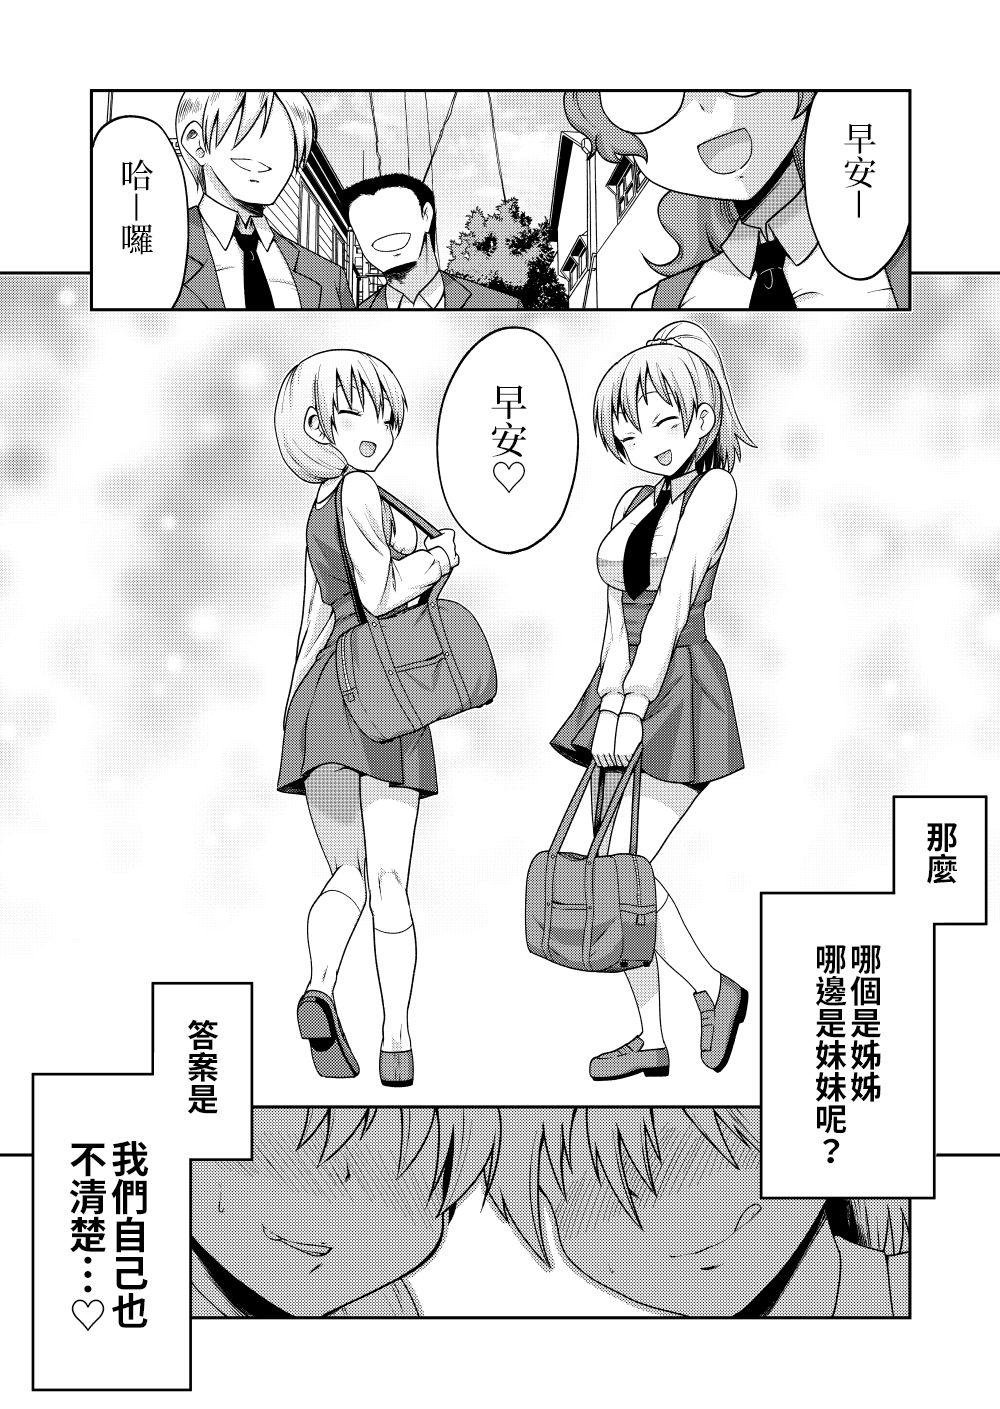 Sextape Futago Manga | 雙胞胎漫畫 - Original Love - Page 4